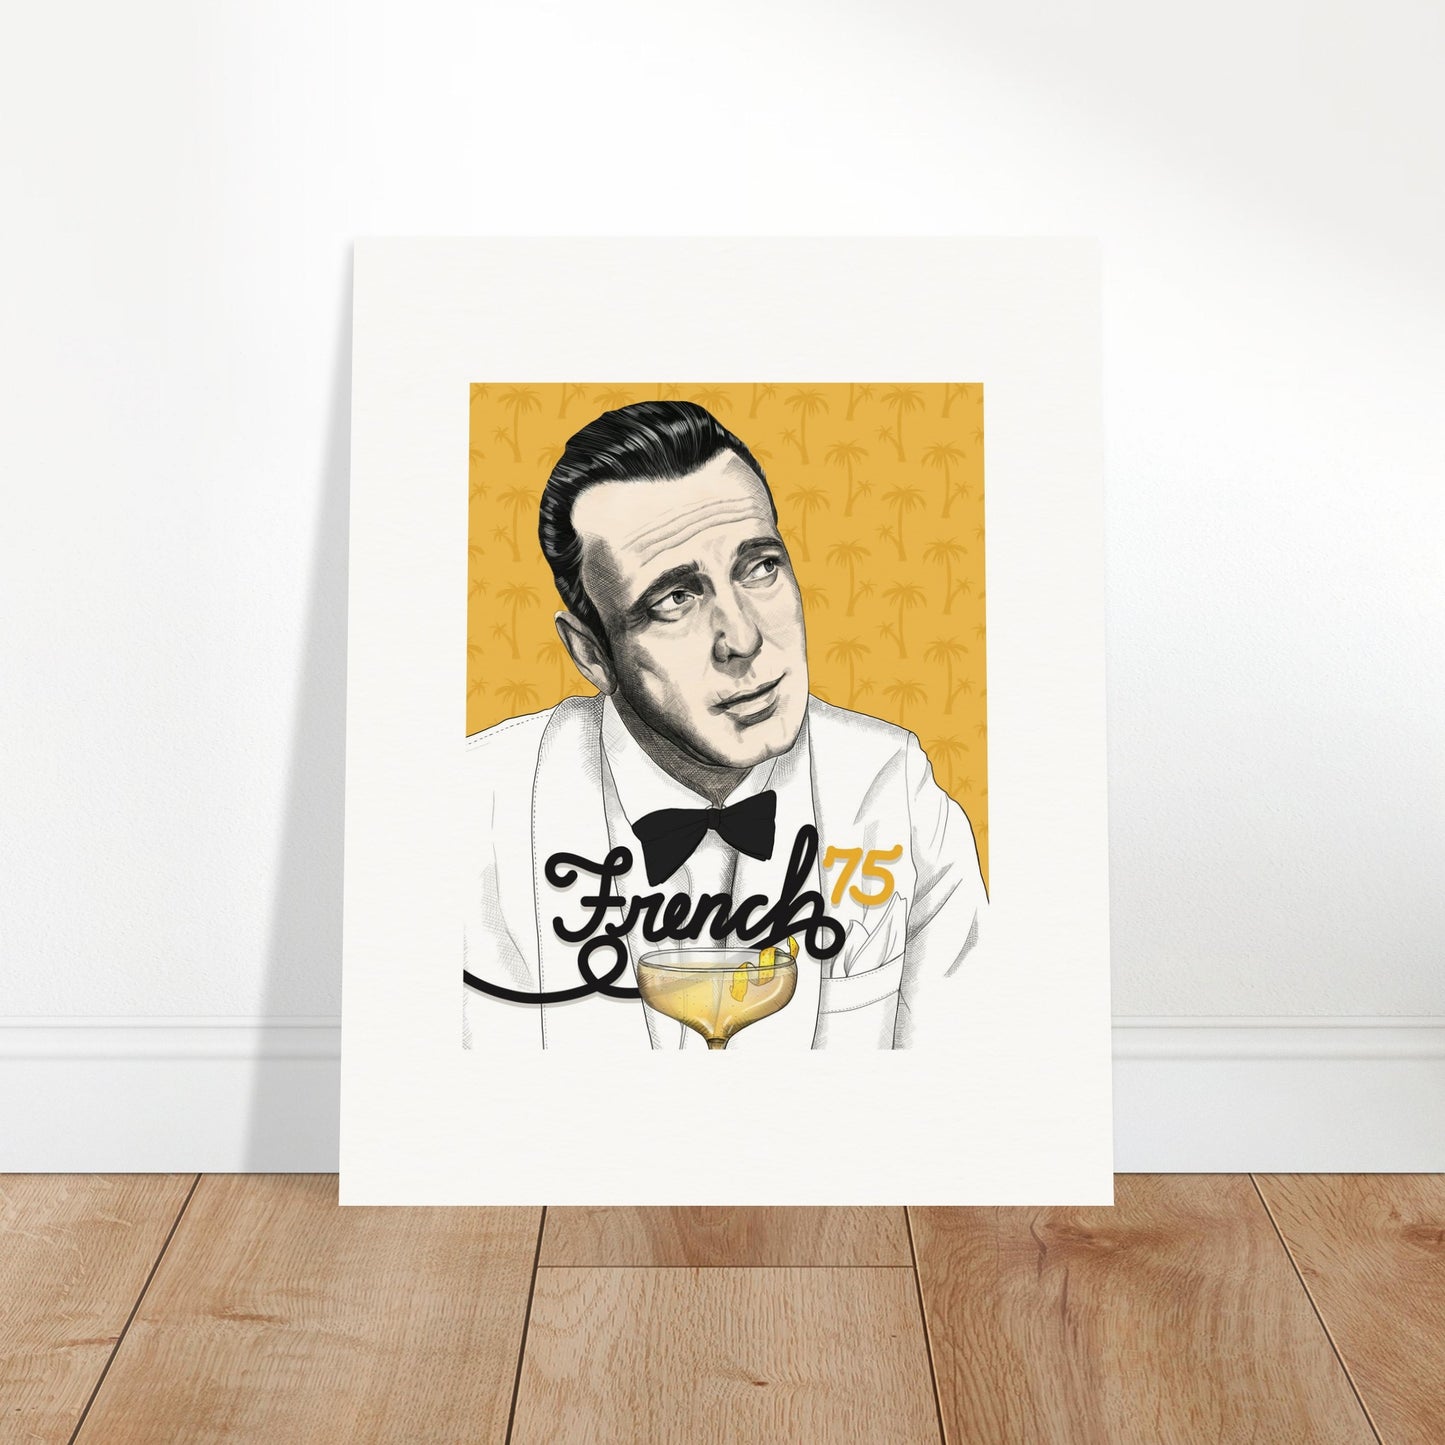 French 75 | Humphrey Bogart | Casablanca - Poster Print